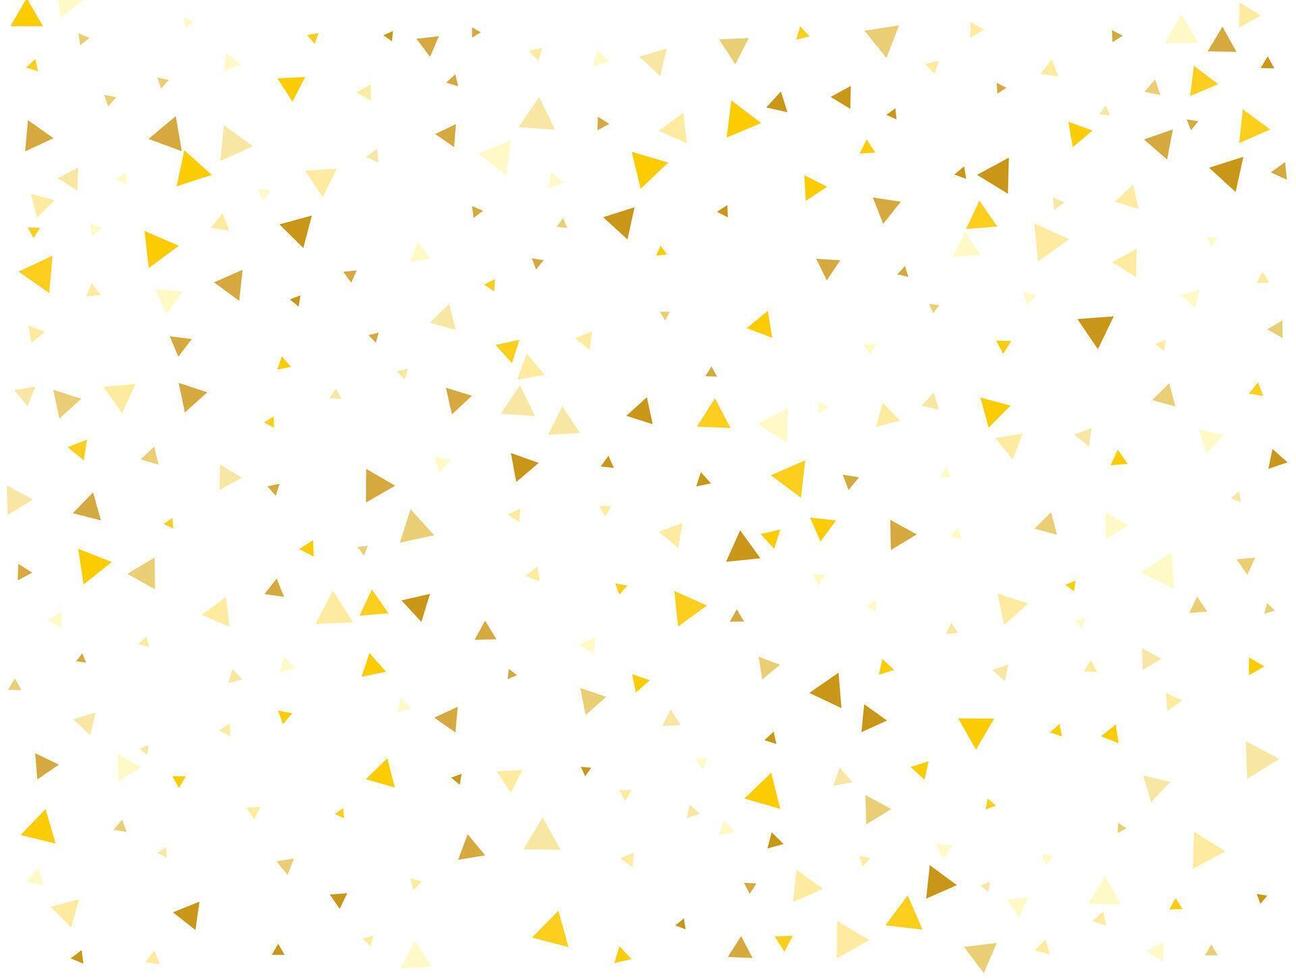 Wedding Golden Triangular Confetti Background. Vector illustration